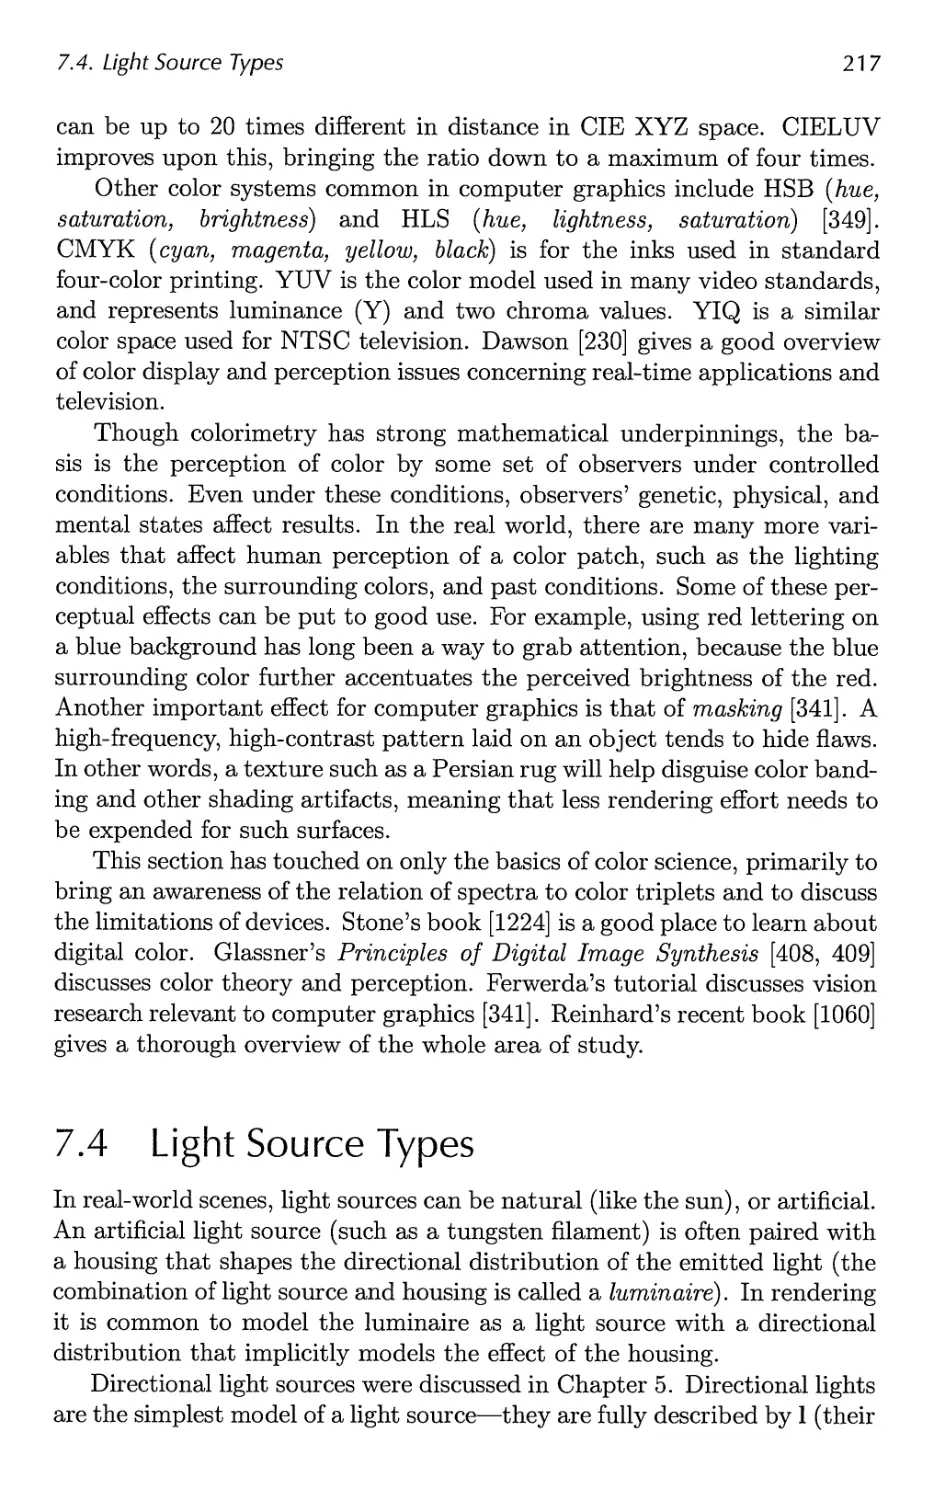 7.4 Light Source Types